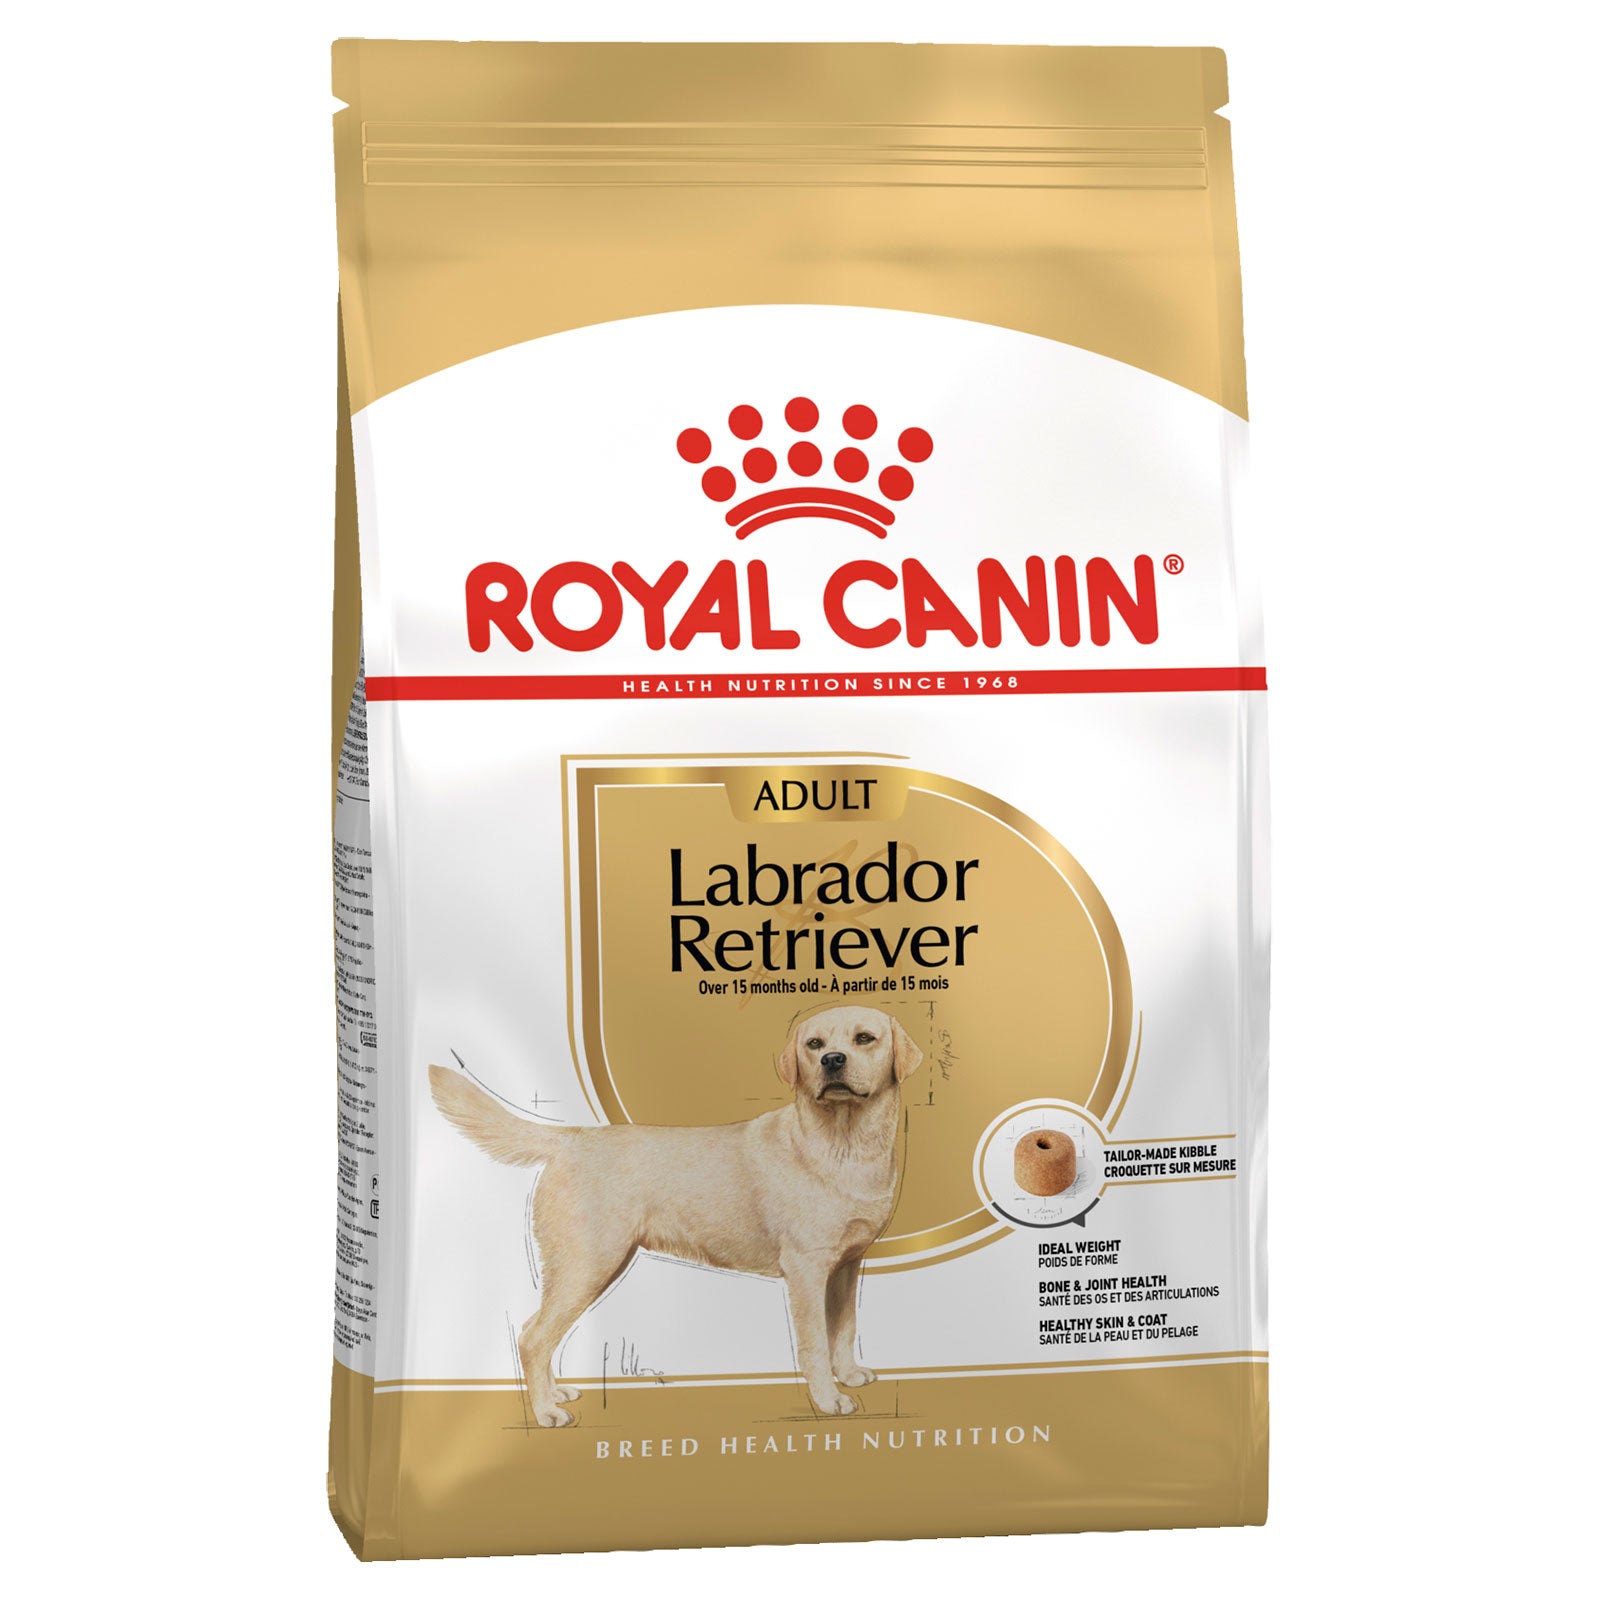 Royal Canin Dog Food Adult Labrador